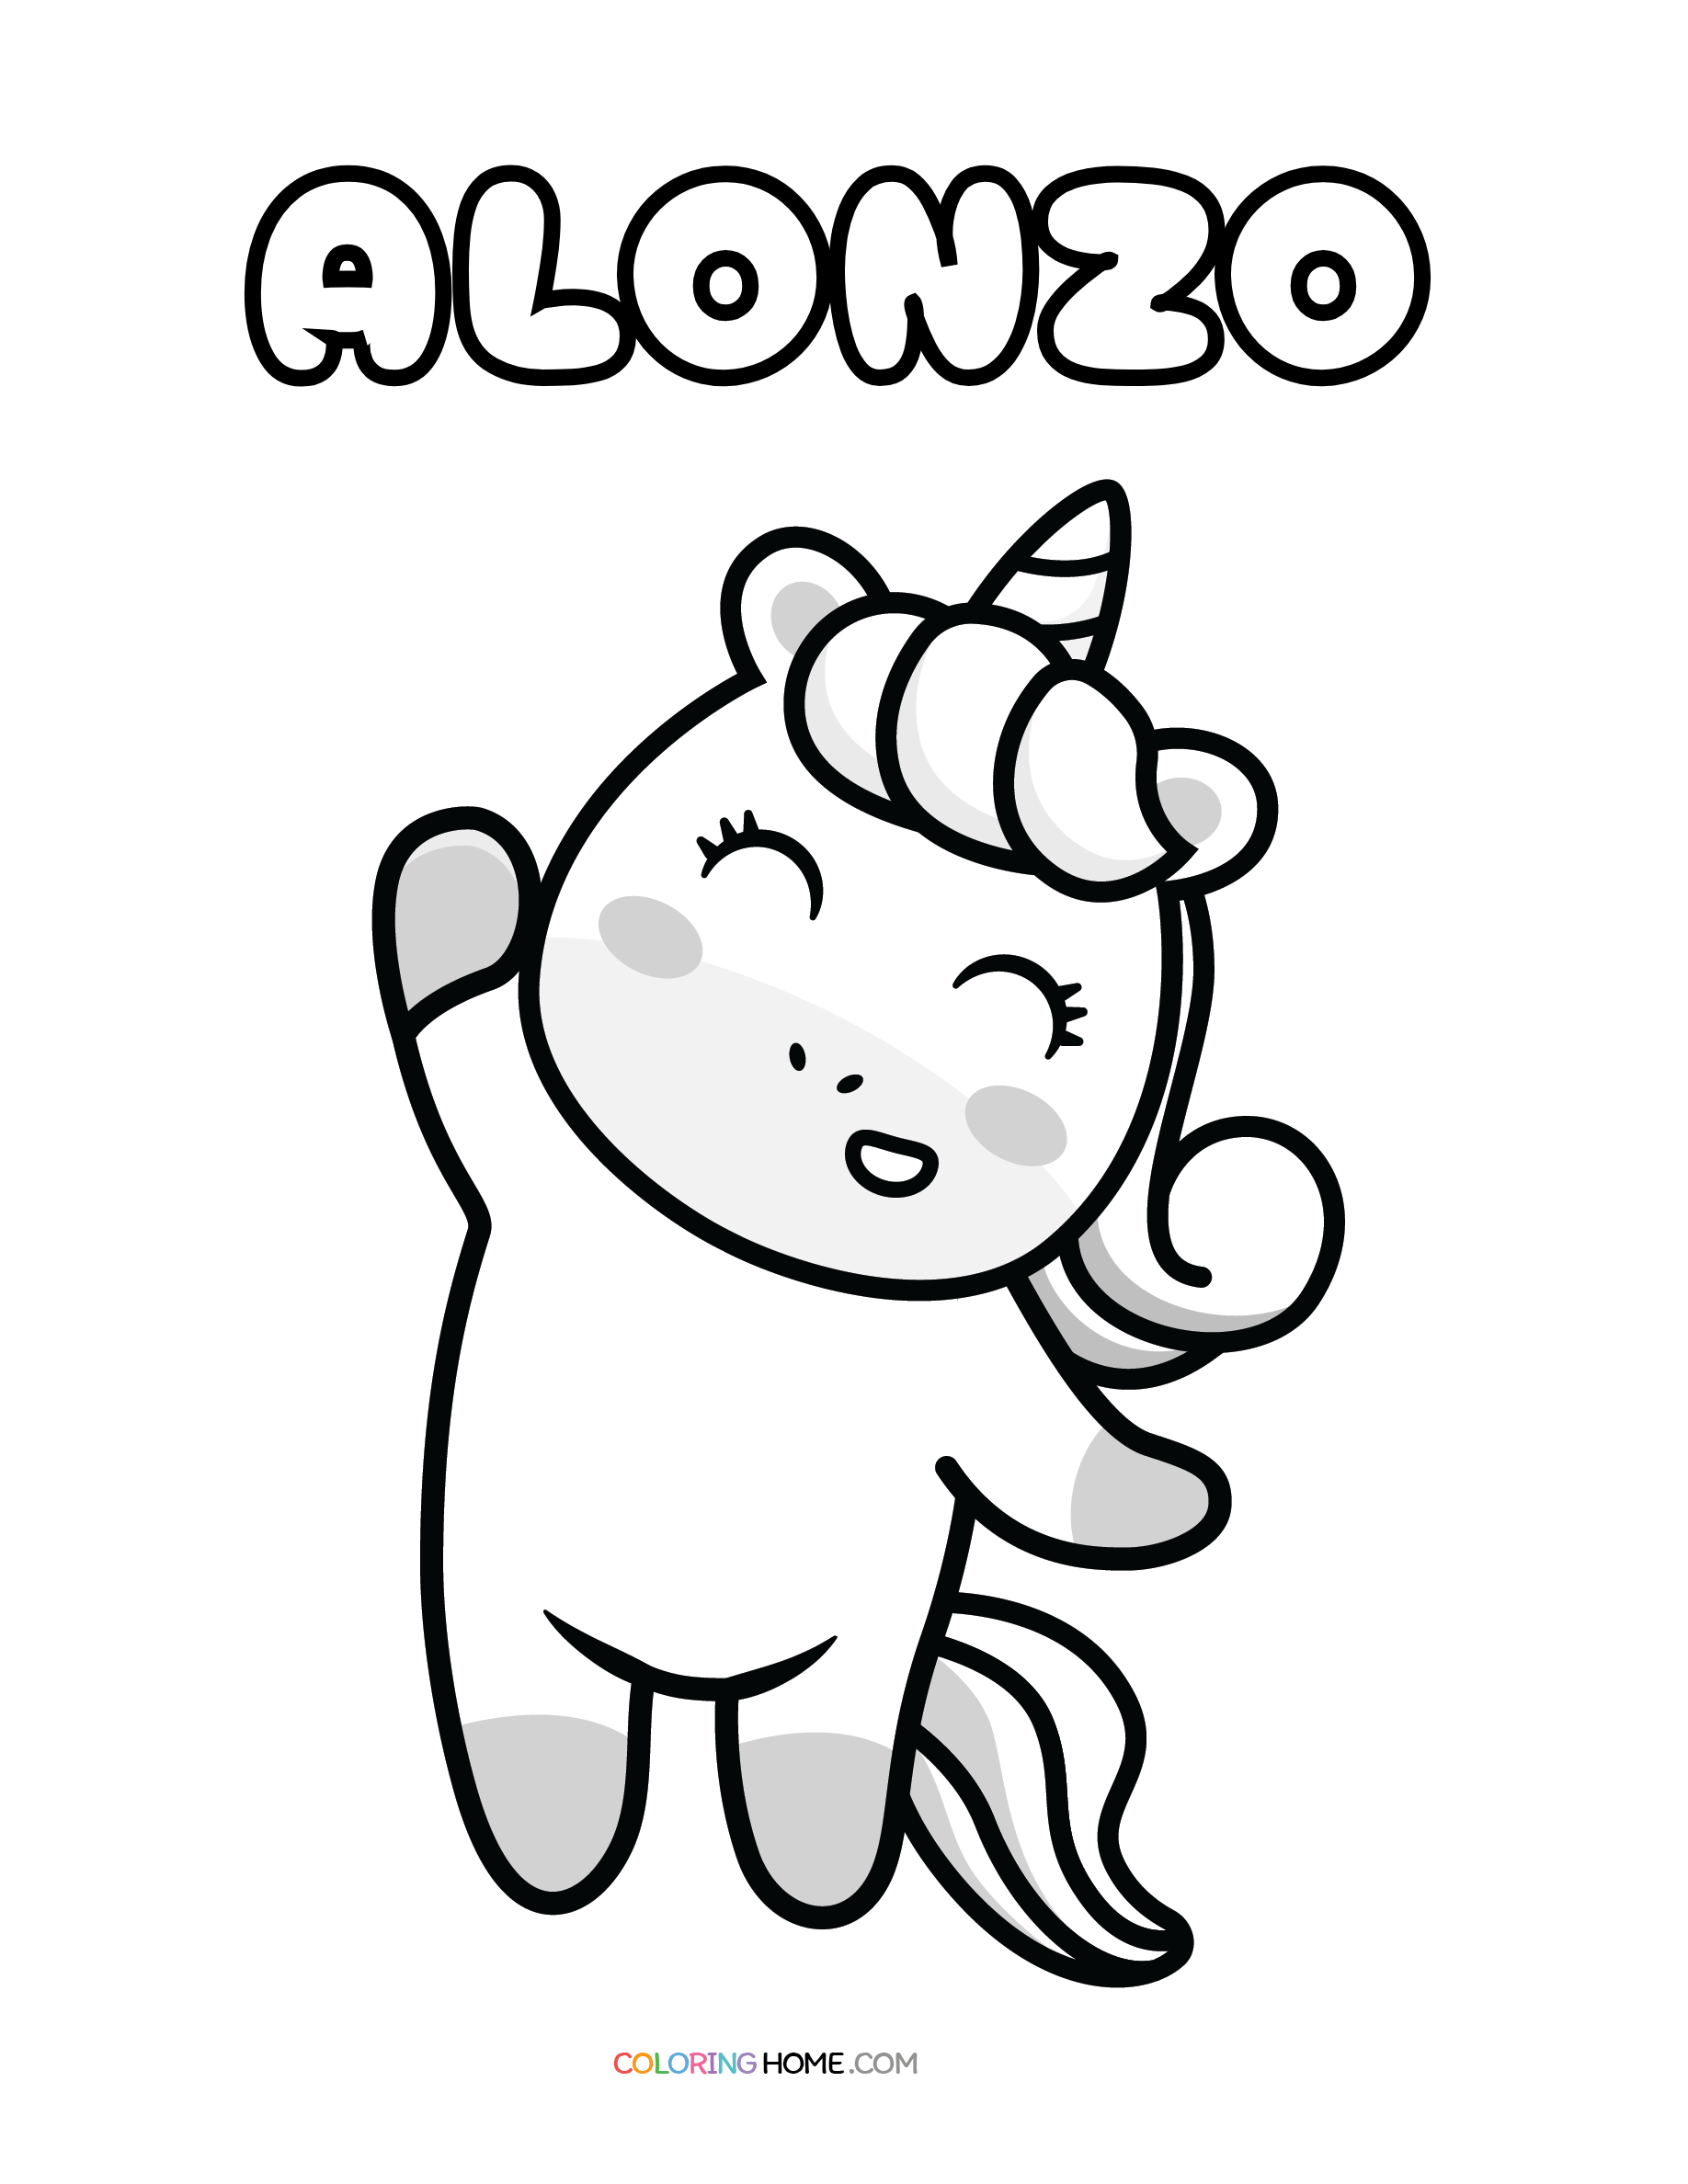 Alonzo unicorn coloring page